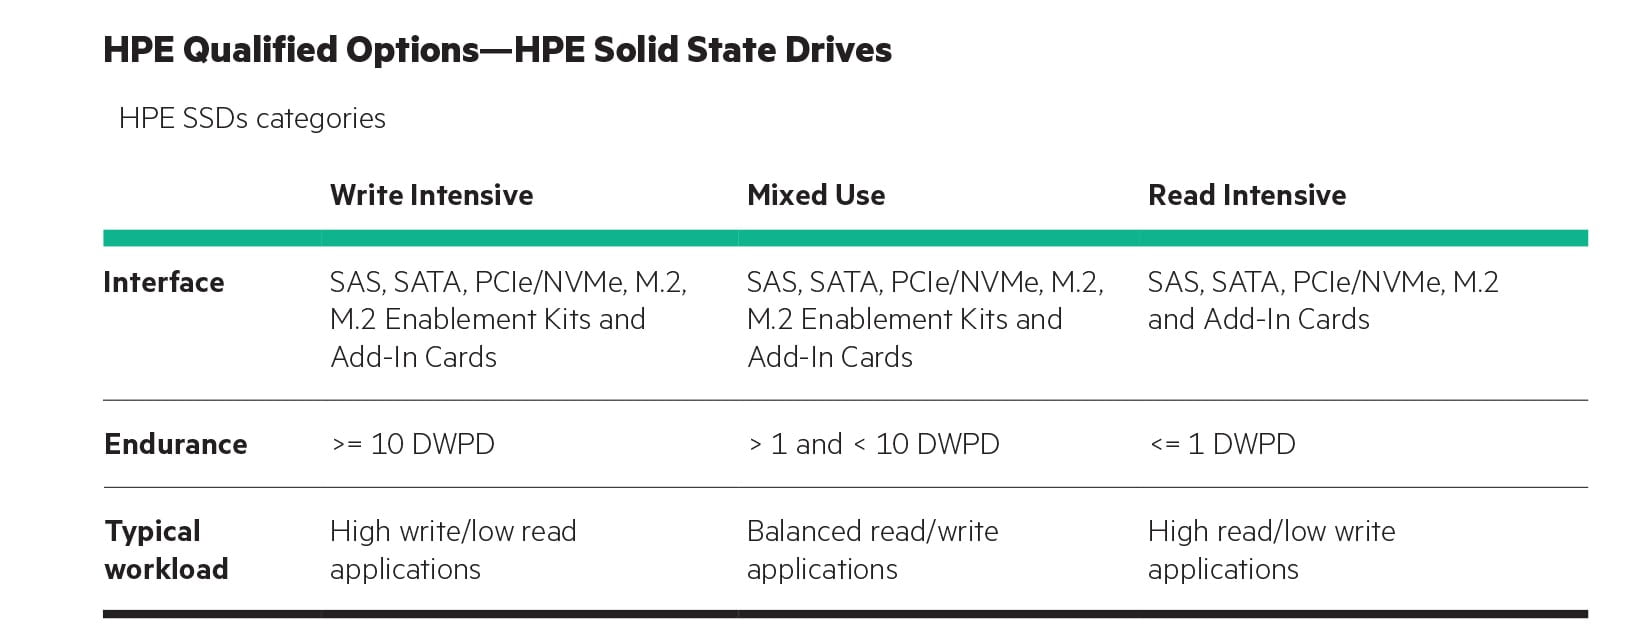 انواع HPE SSD بر اساس حجم کاری